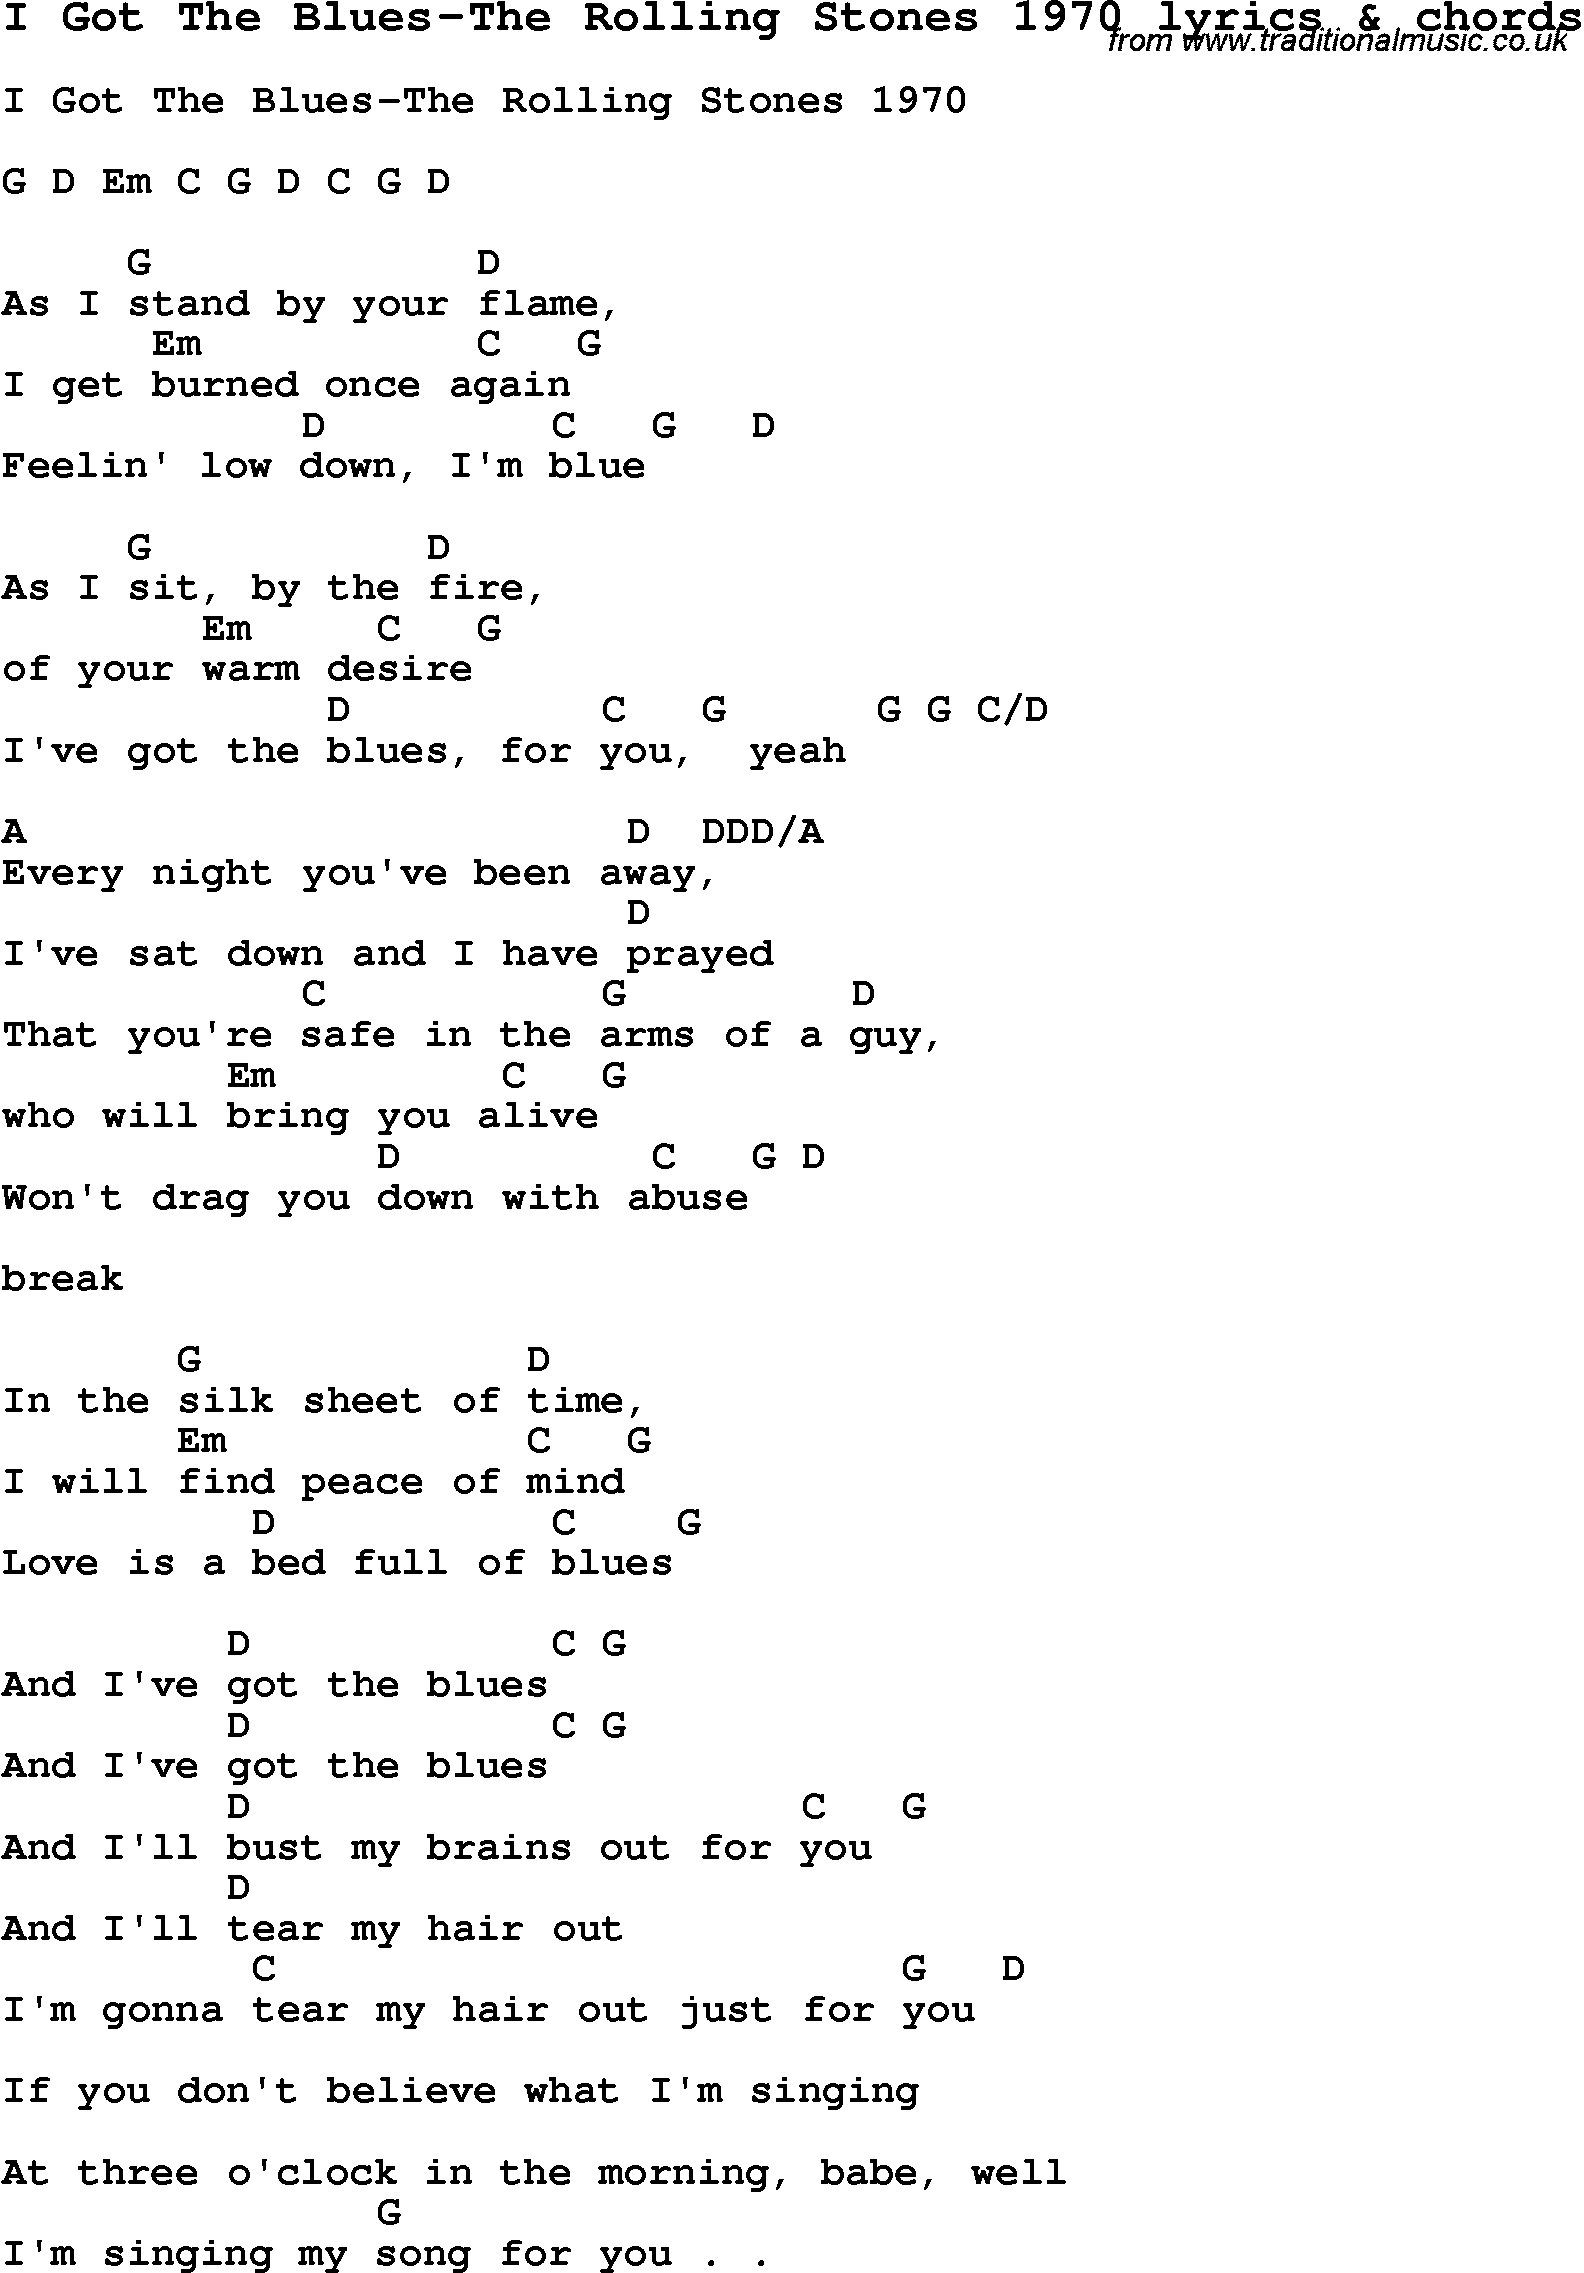 Love Song Lyrics for: I Got The Blues-The Rolling Stones 1970 with chords for Ukulele, Guitar Banjo etc.